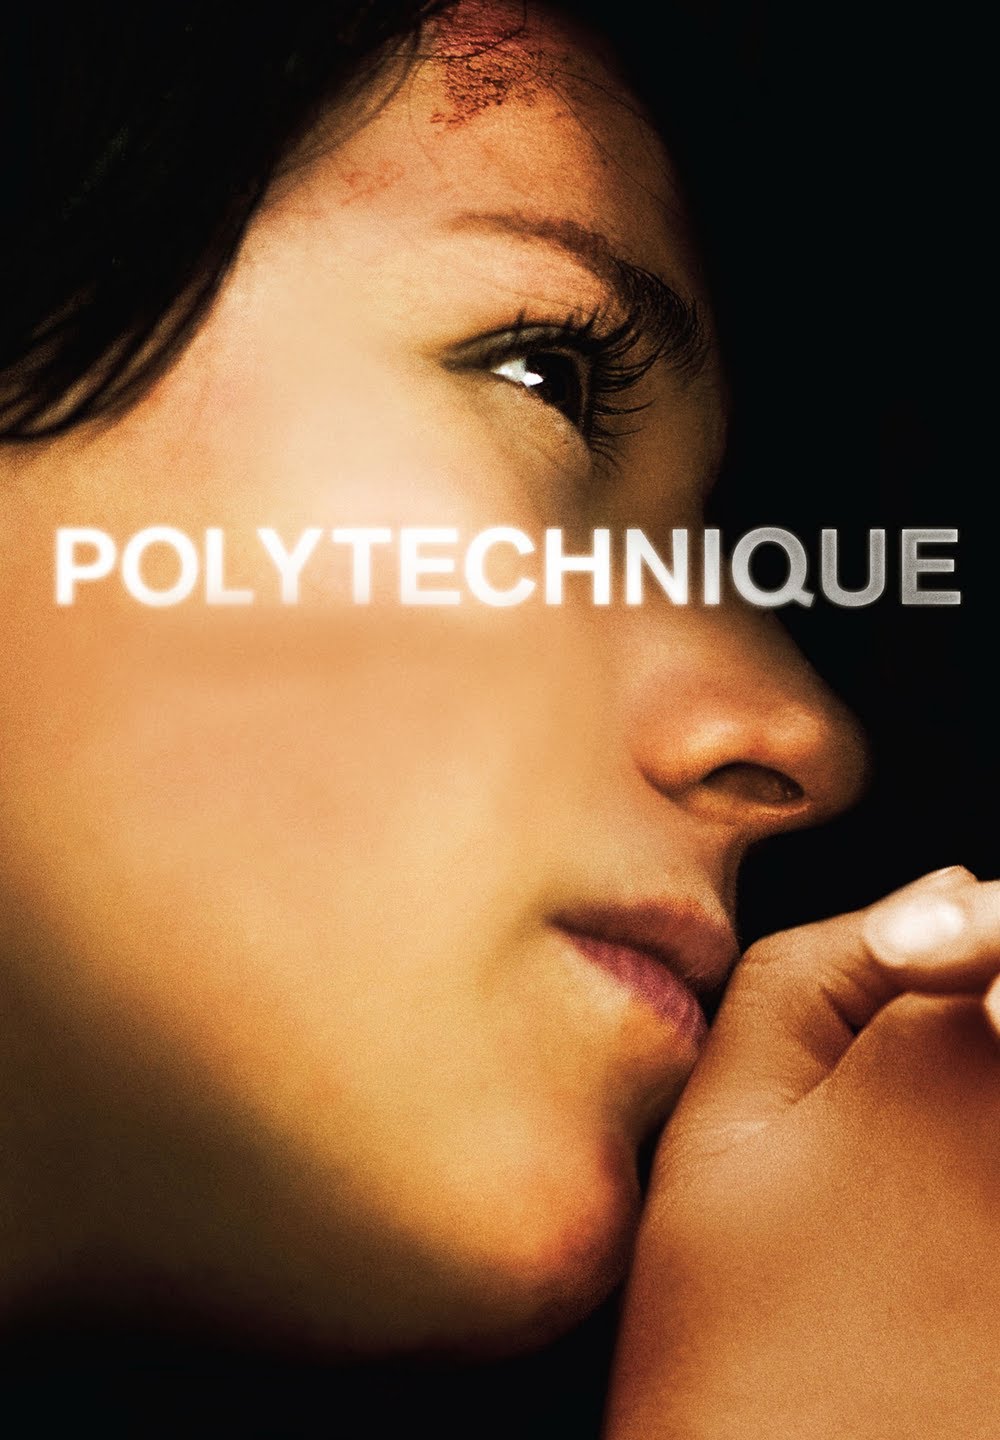 Polytechnique [B/N] [HD] (2009)